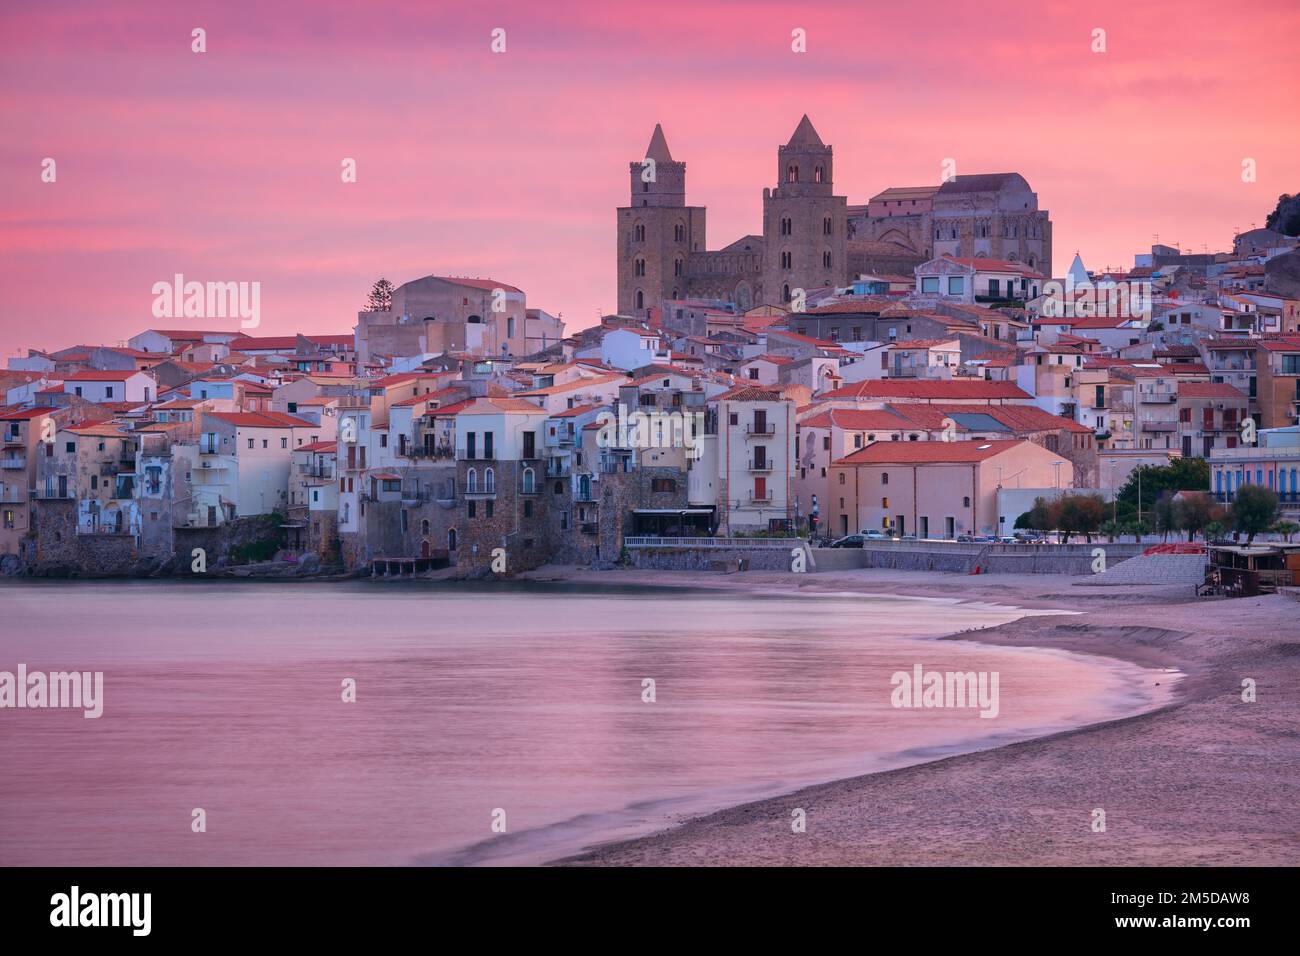 Cefalu, Sicily, Italy. Cityscape image if coastal town Cefalu in Sicily at dramatic sunset. Stock Photo